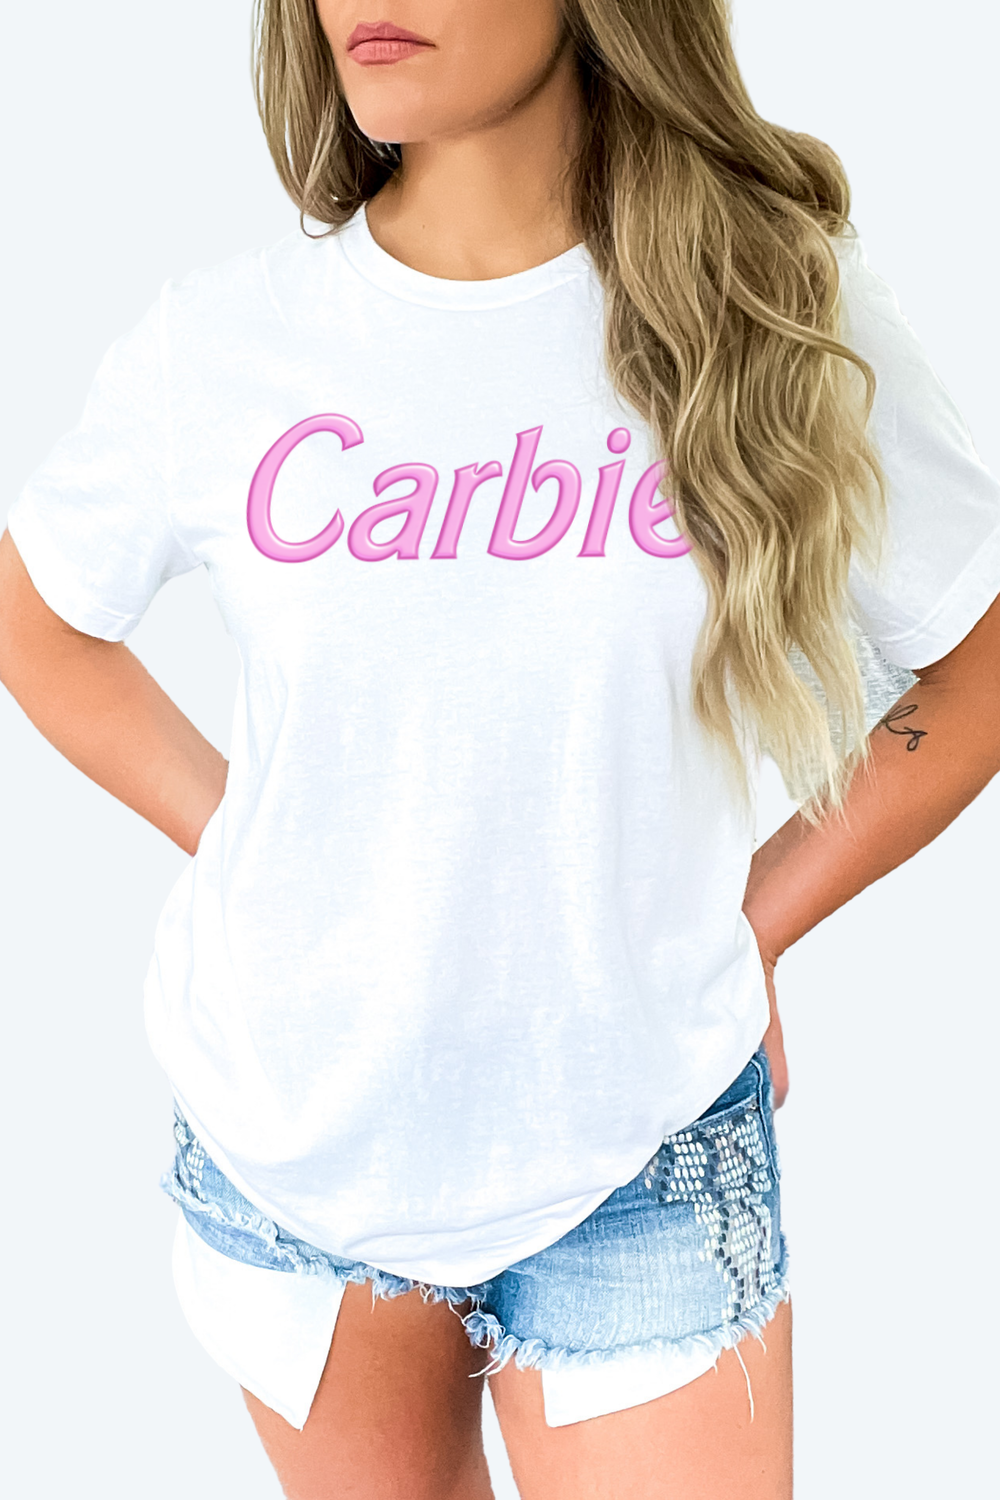 Carbie Women's Casual T-Shirt